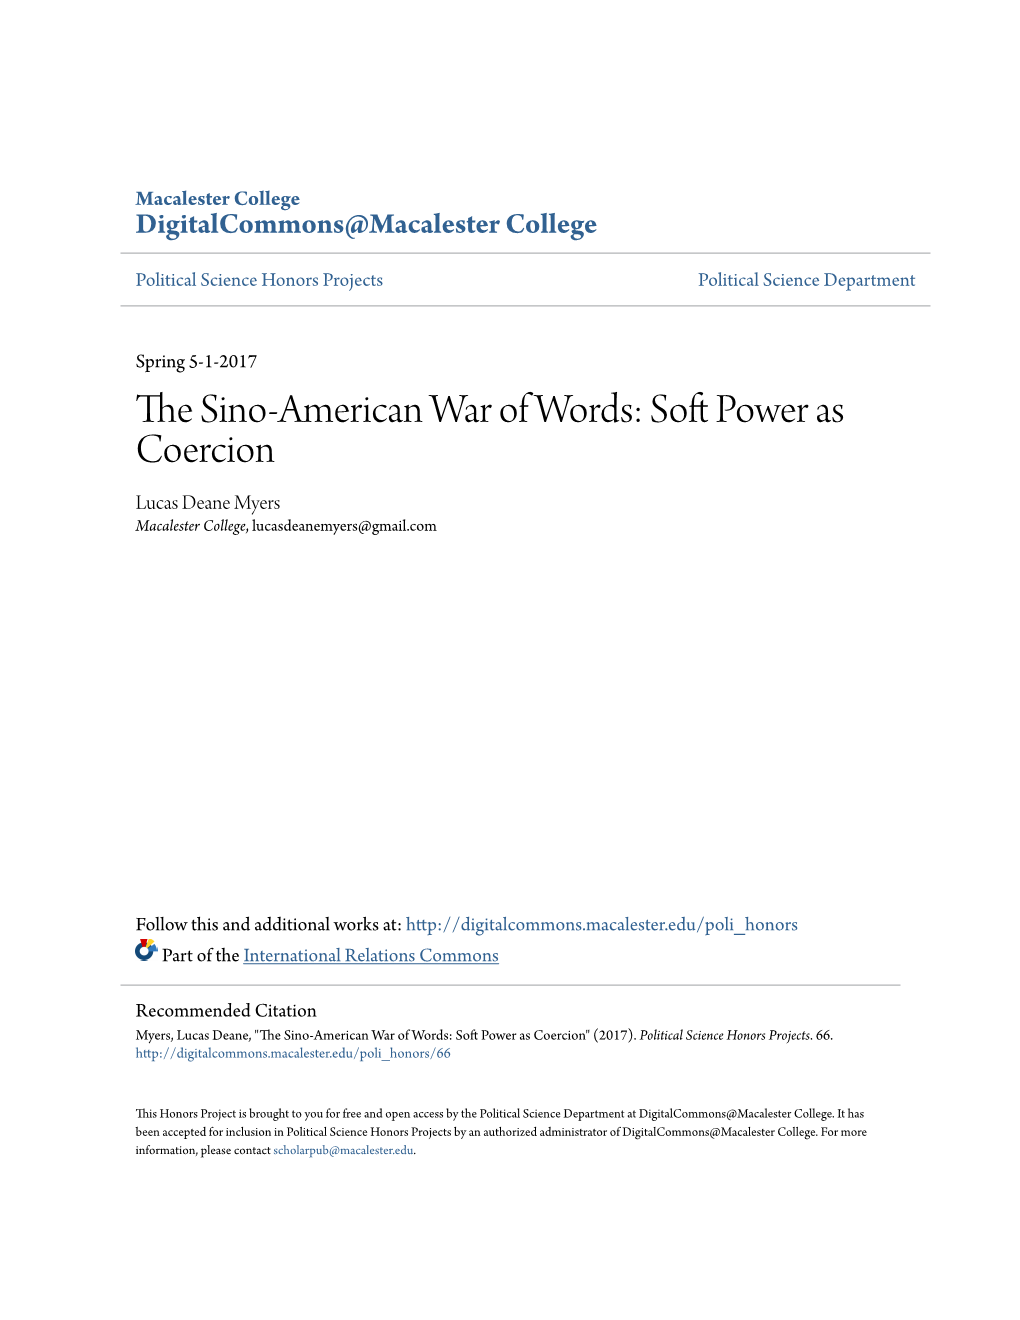 The Sino-American War of Words: Soft Power As Coercion